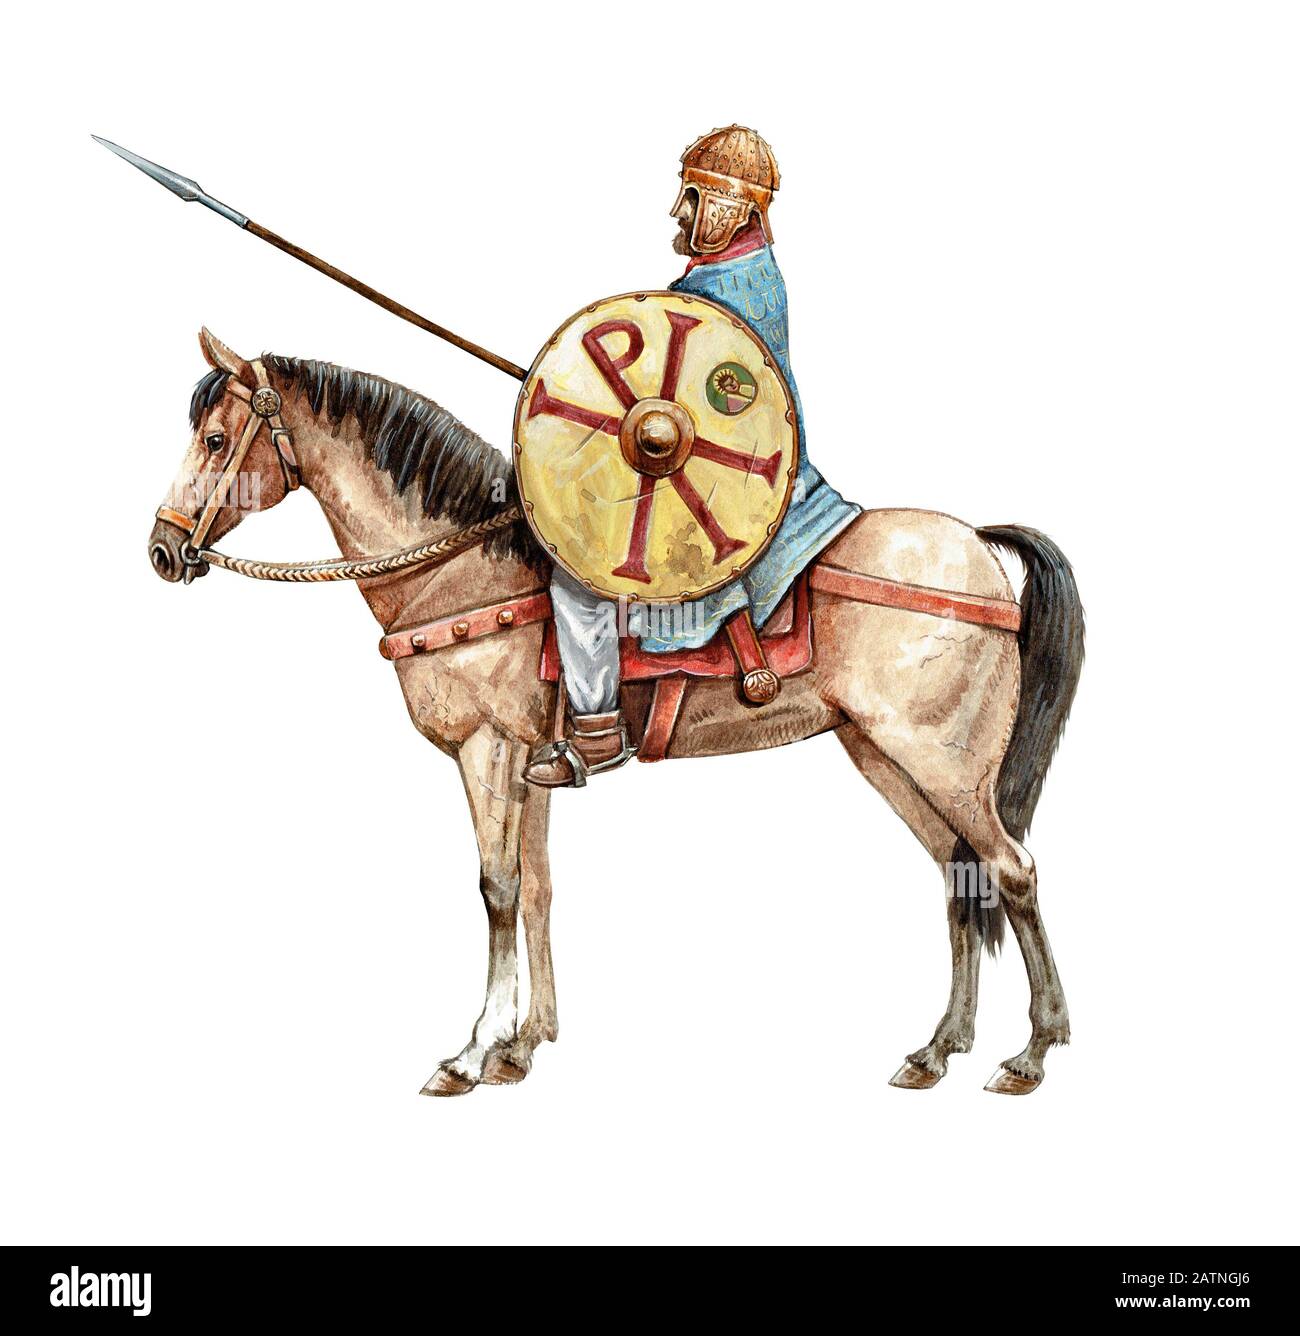 Ancient byzantine rider. Ancient warrior on horseback. Chi Rho on the knight's shield. Book Illustration. Stock Photo